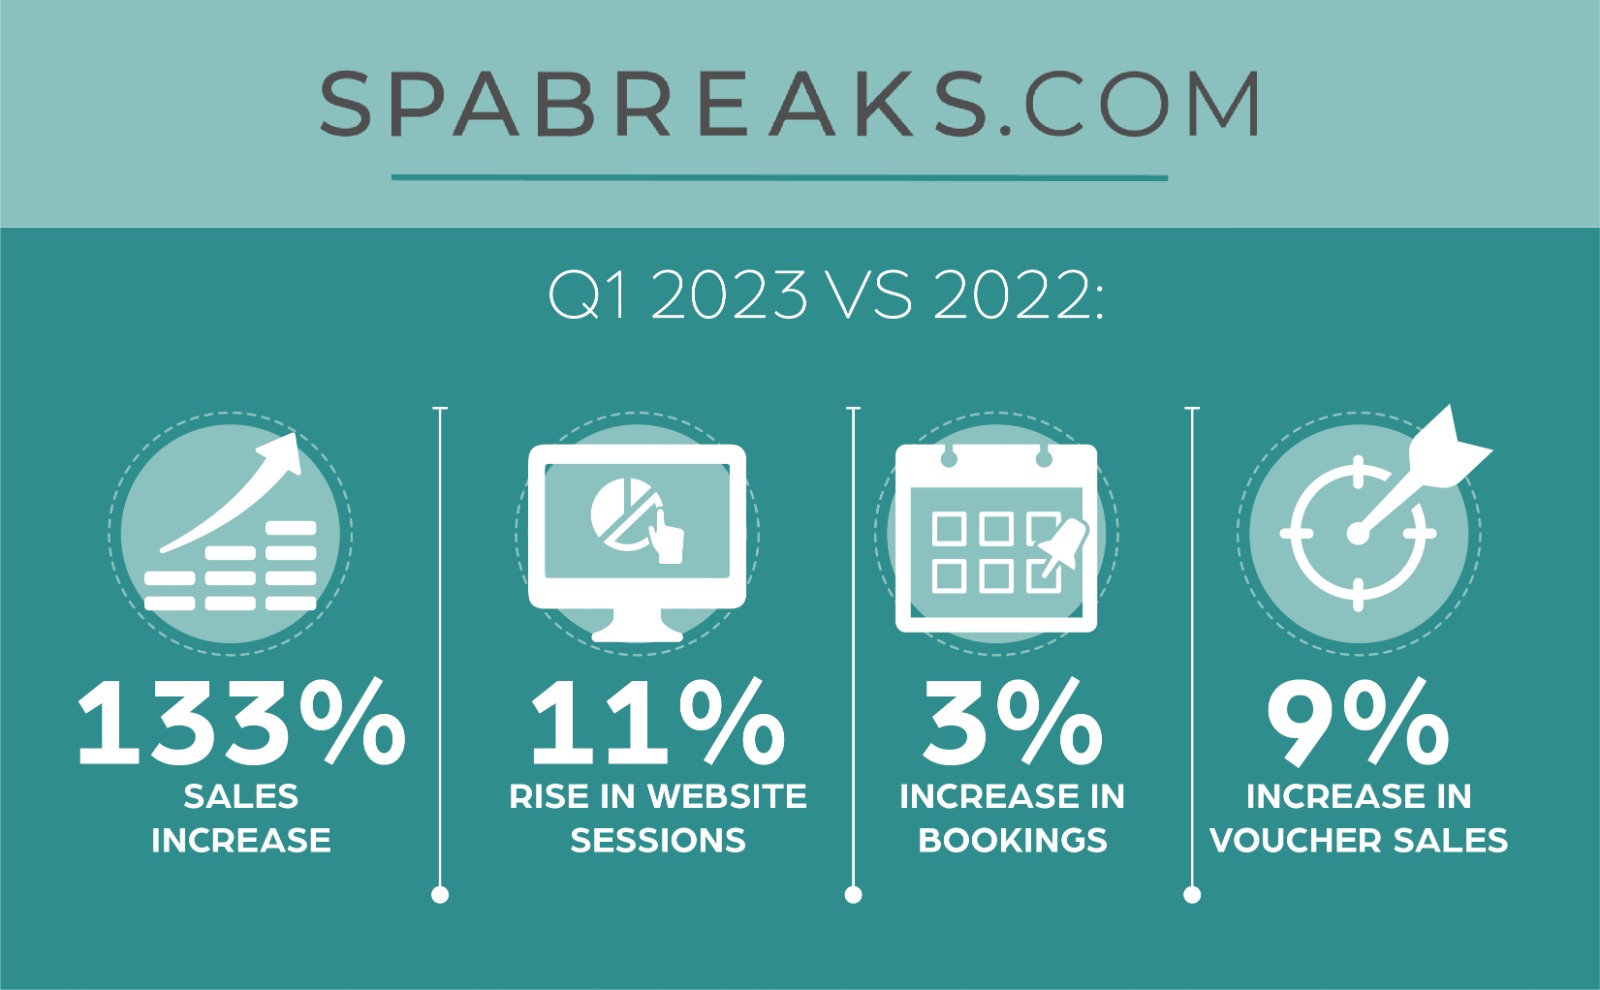 SPABREAKS.COM ANNOUNCES RECORD SALES #spabreaks #recordsales #industrynews